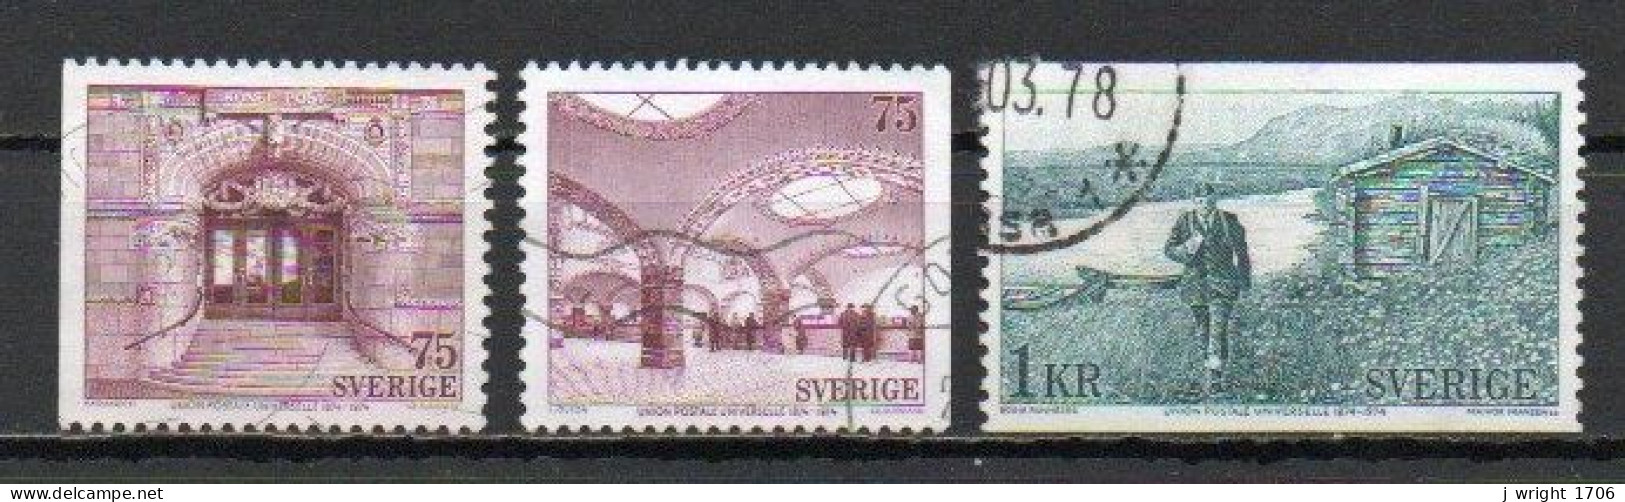 Sweden, 1974, UPU Centenary, Set, USED - Usati